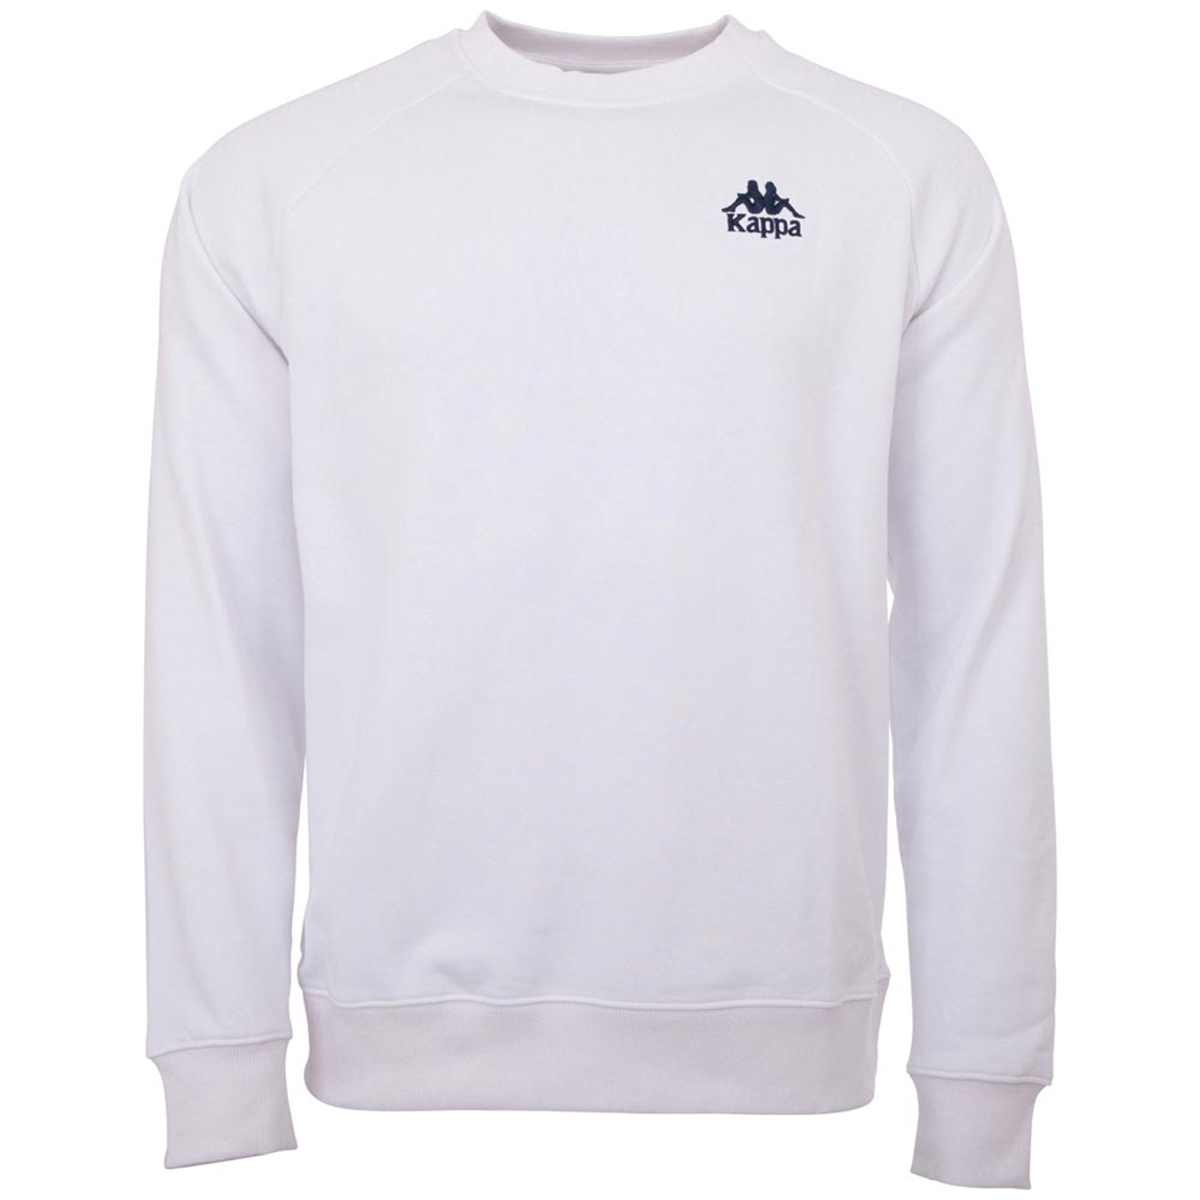 Kappa Herren Sweatshirt Authentic Taule | Langarm Shirt, Retro-Look Hoodie, Pullover Sweater Long-Shirt, Regular fit | 001 white, Größe XL